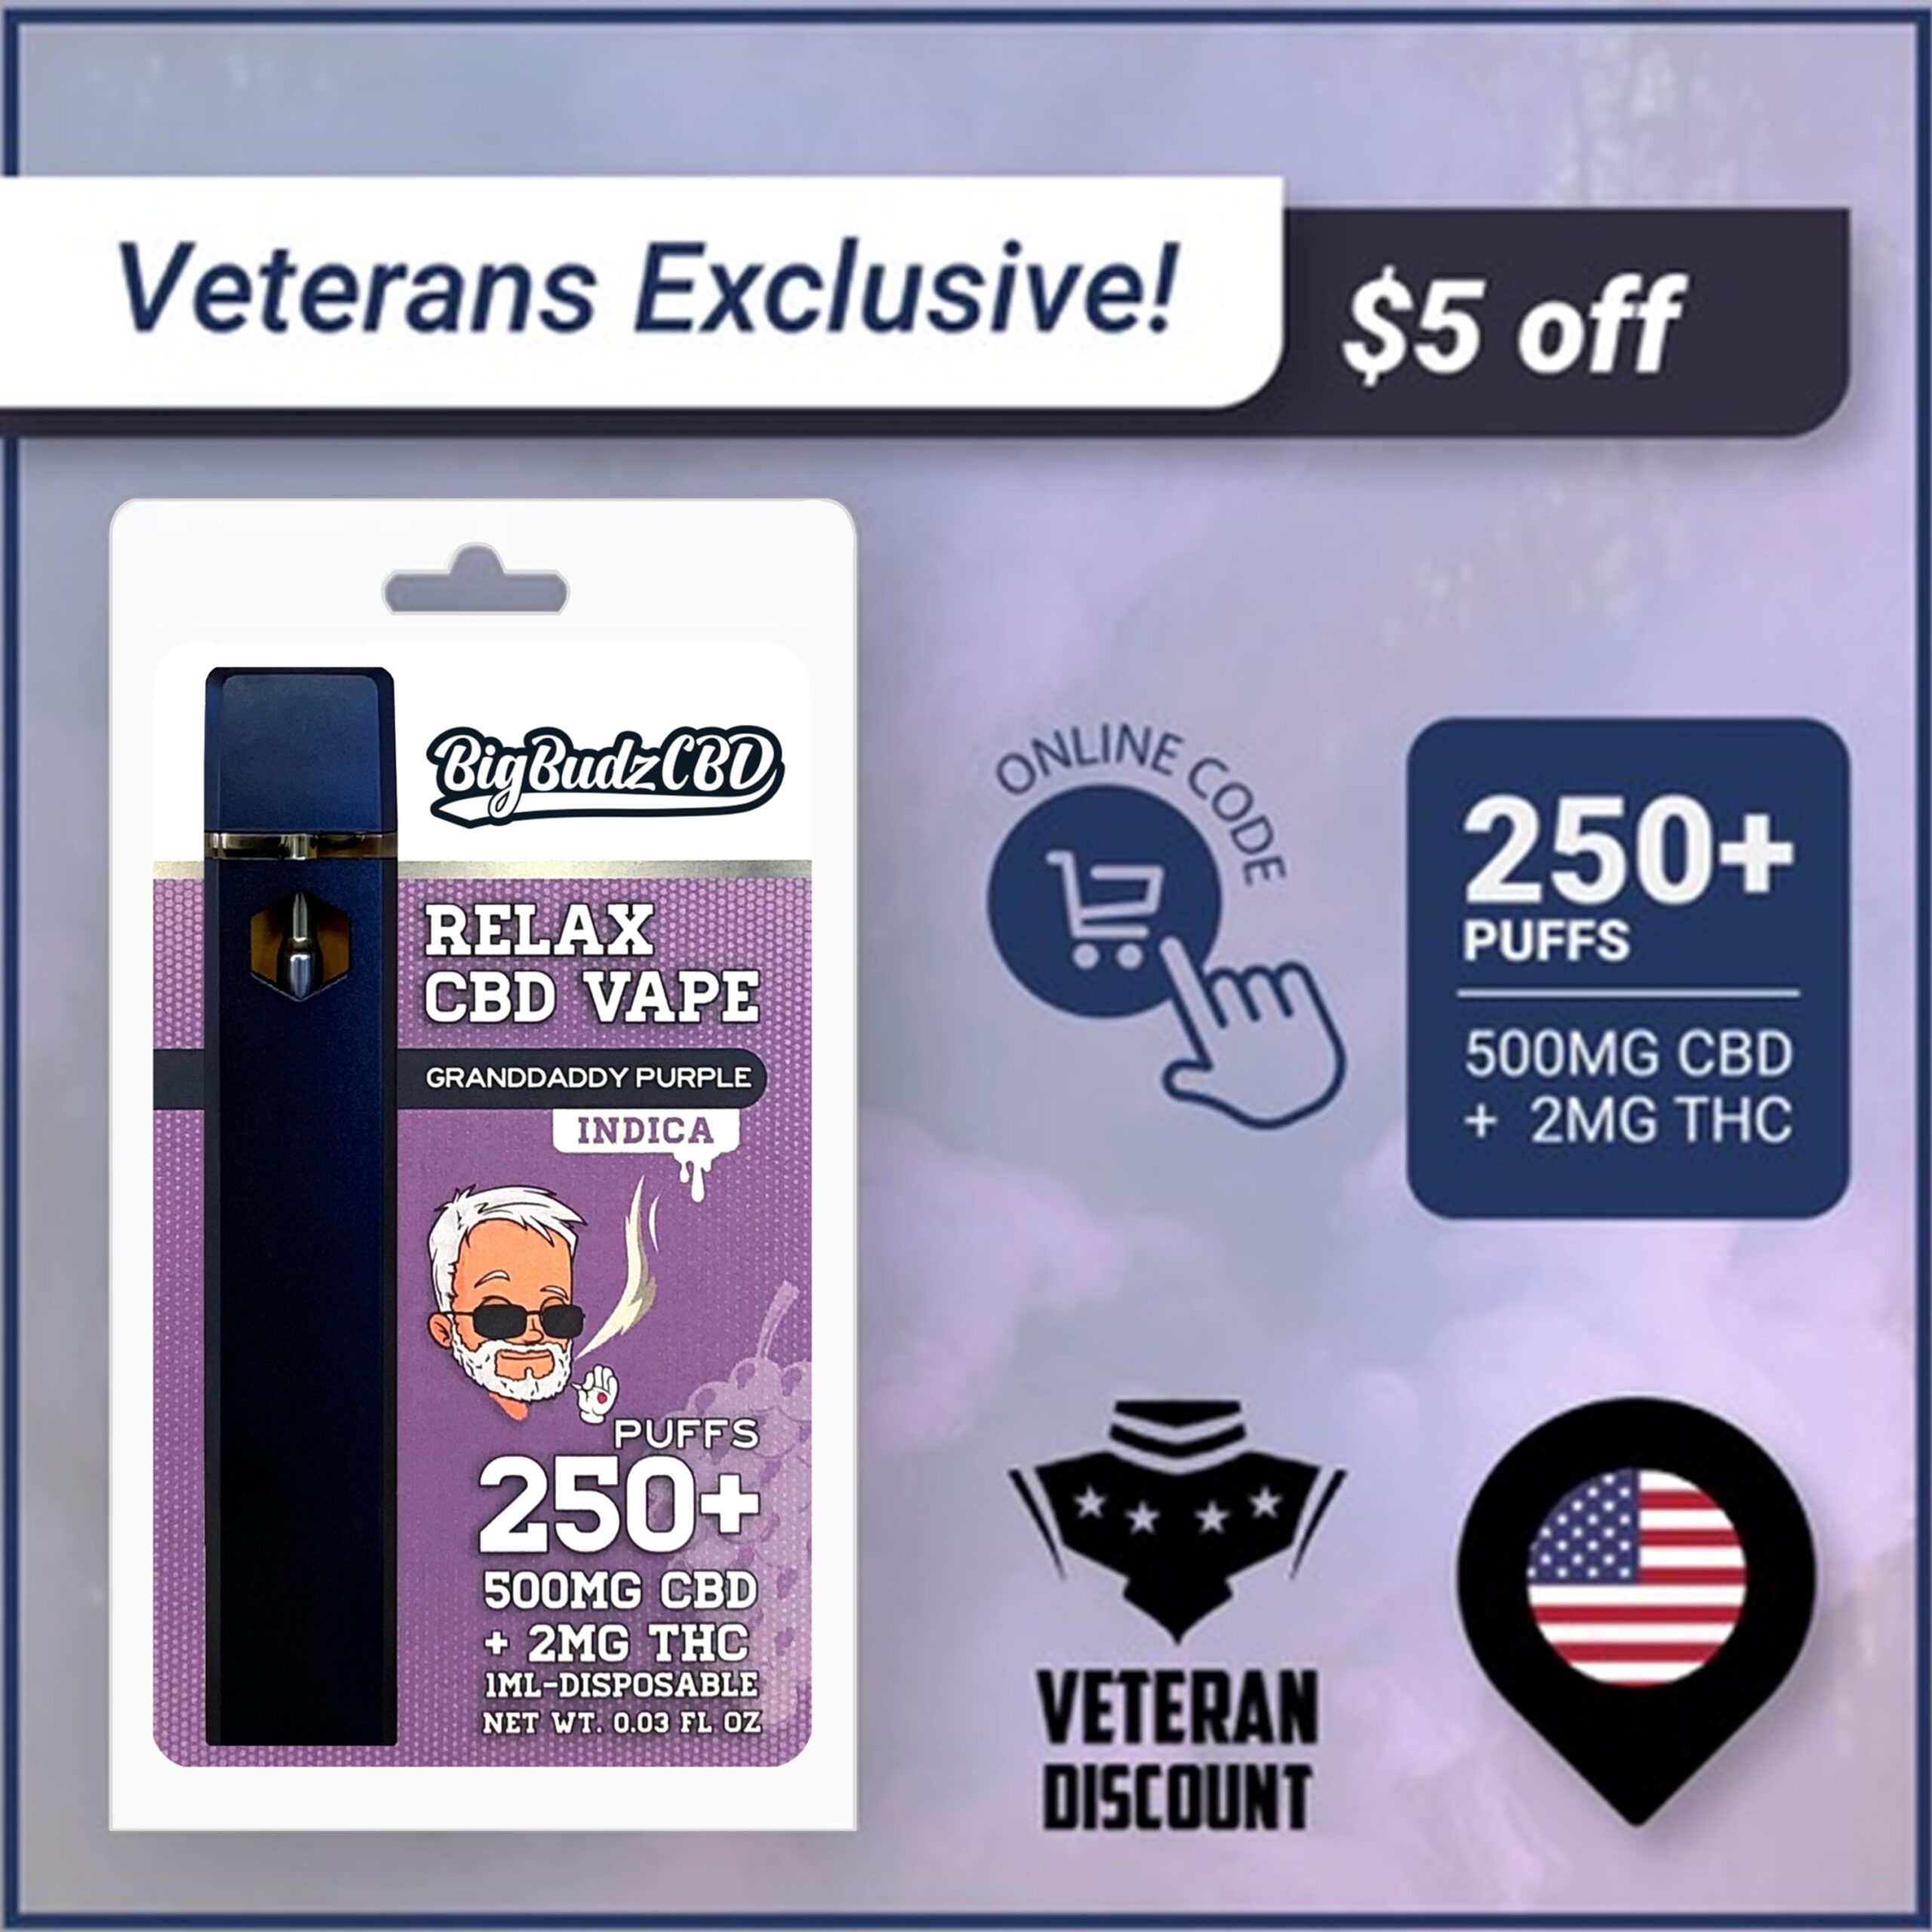 (veteran discount coupon) Granddaddy Purple vape pen $5 off